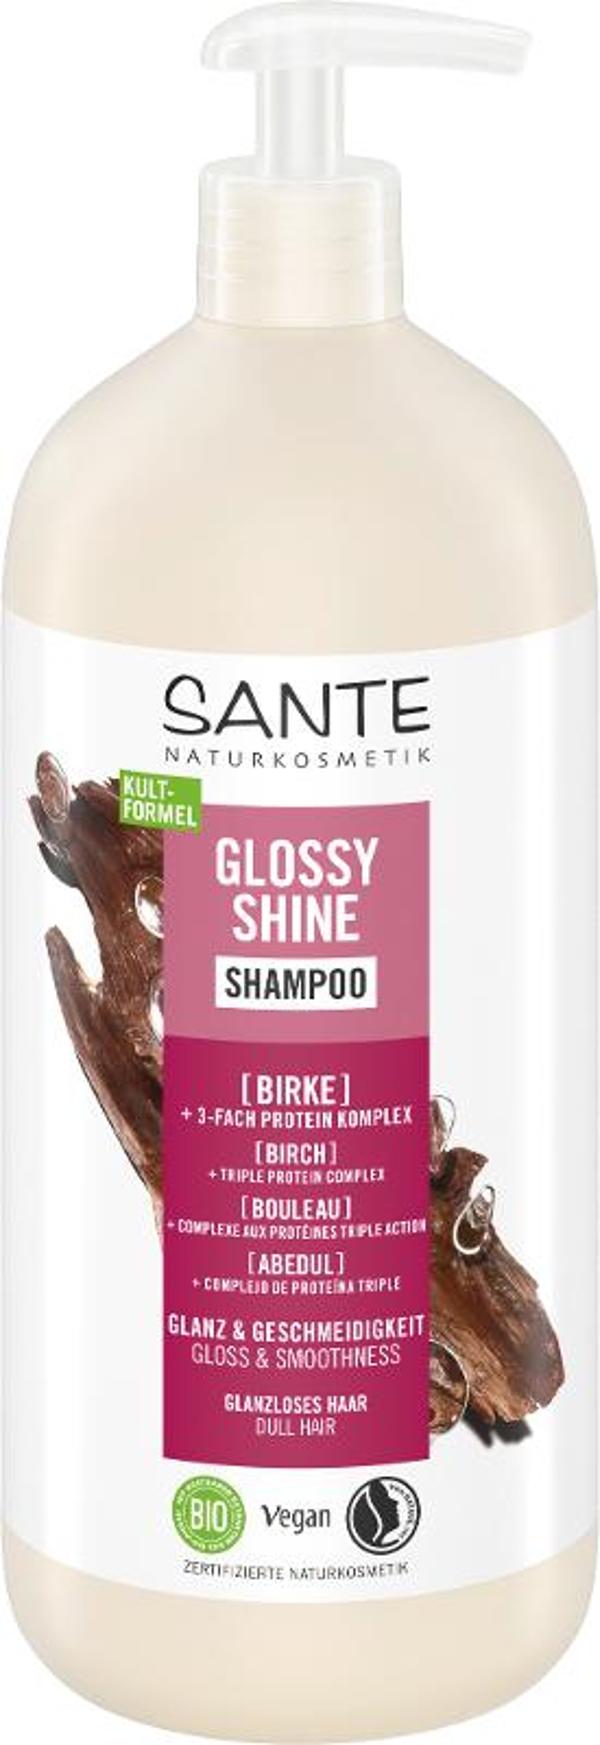 Produktfoto zu Glossy Shine Shampoo Birke 950ml Sante